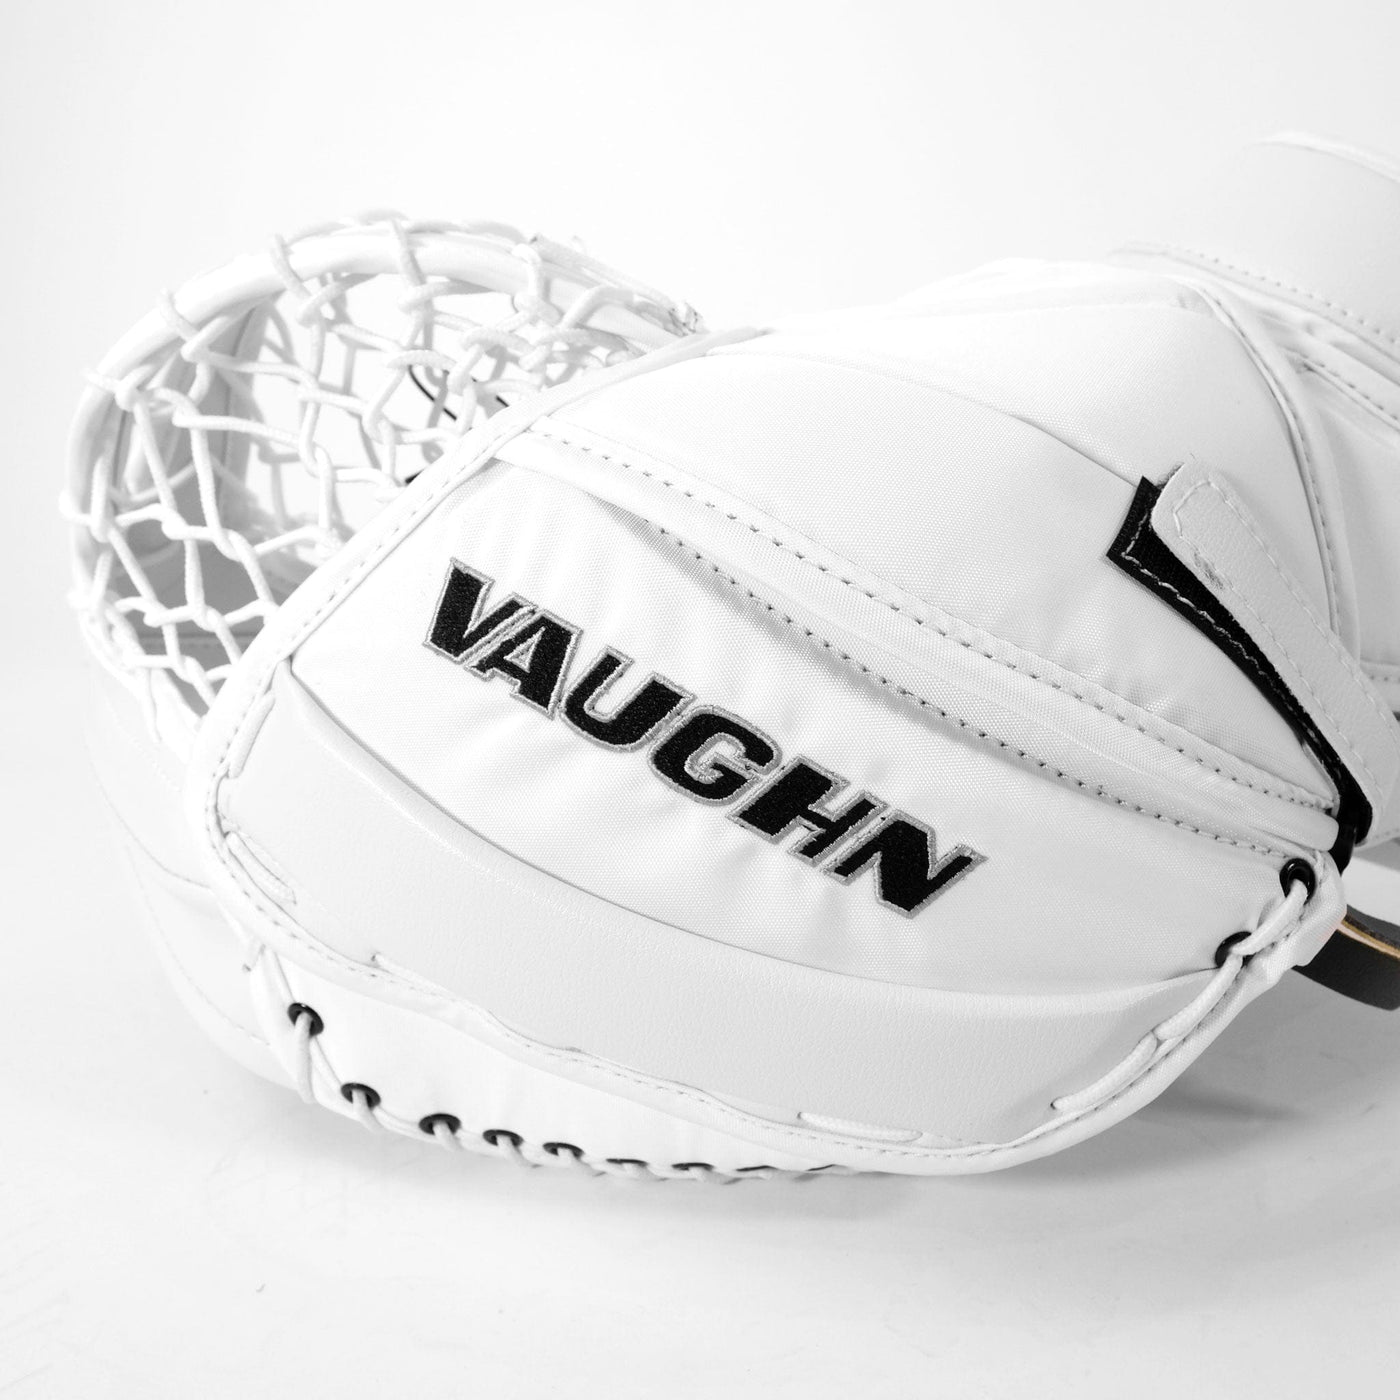 Vaughn Ventus T8800 Pro Carbon w/ V6 Graphic Senior Goalie Catcher - The Hockey Shop Source For Sports